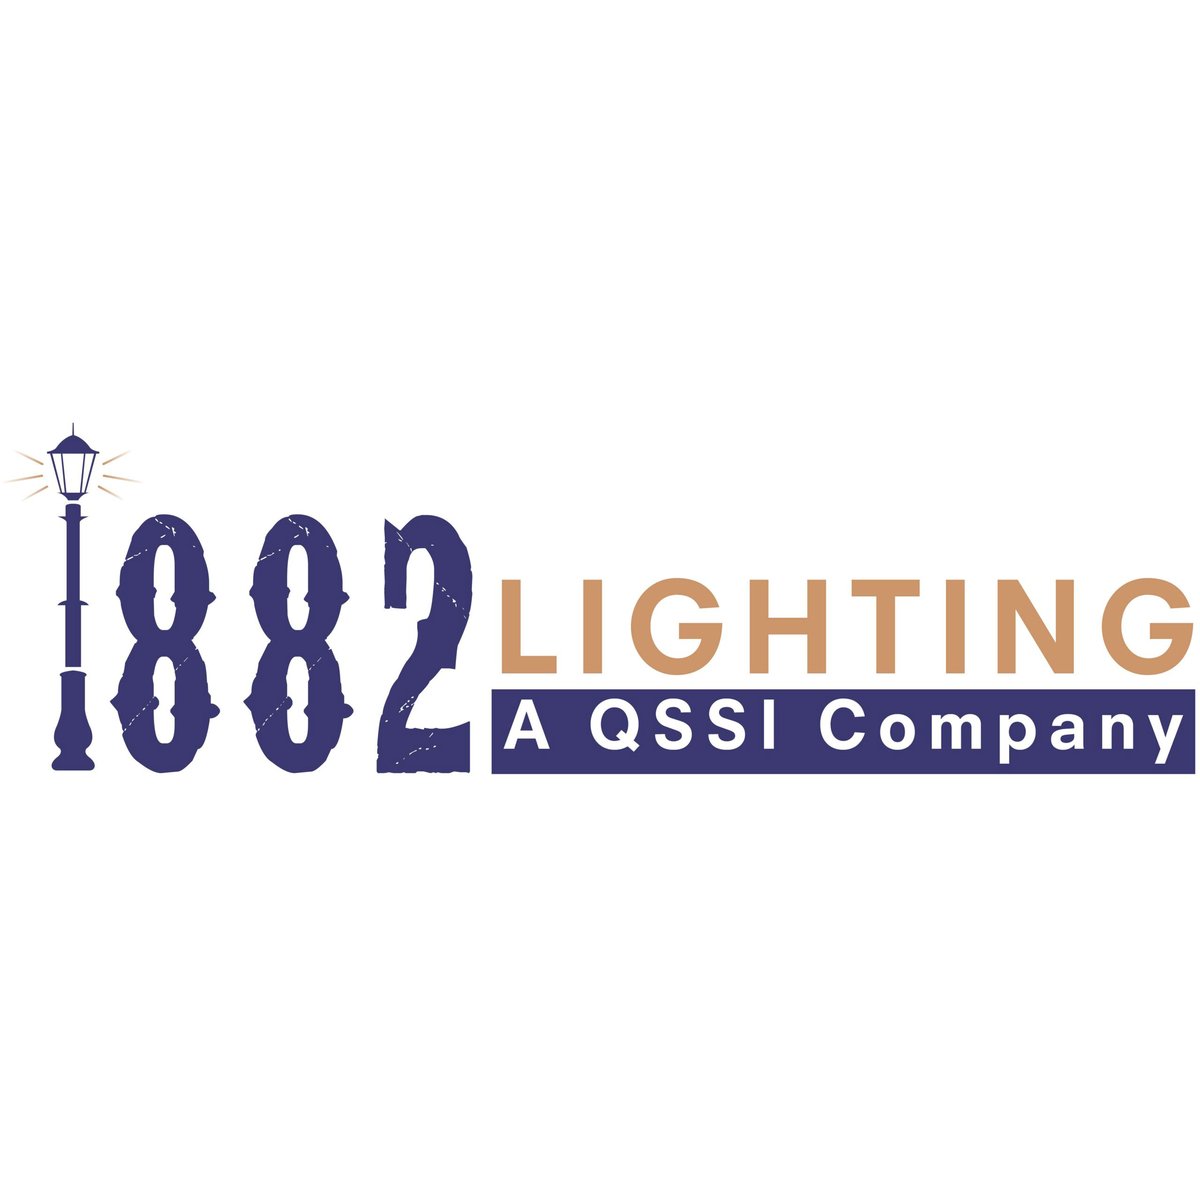 logo-1882-lighting-wide-min-scaled